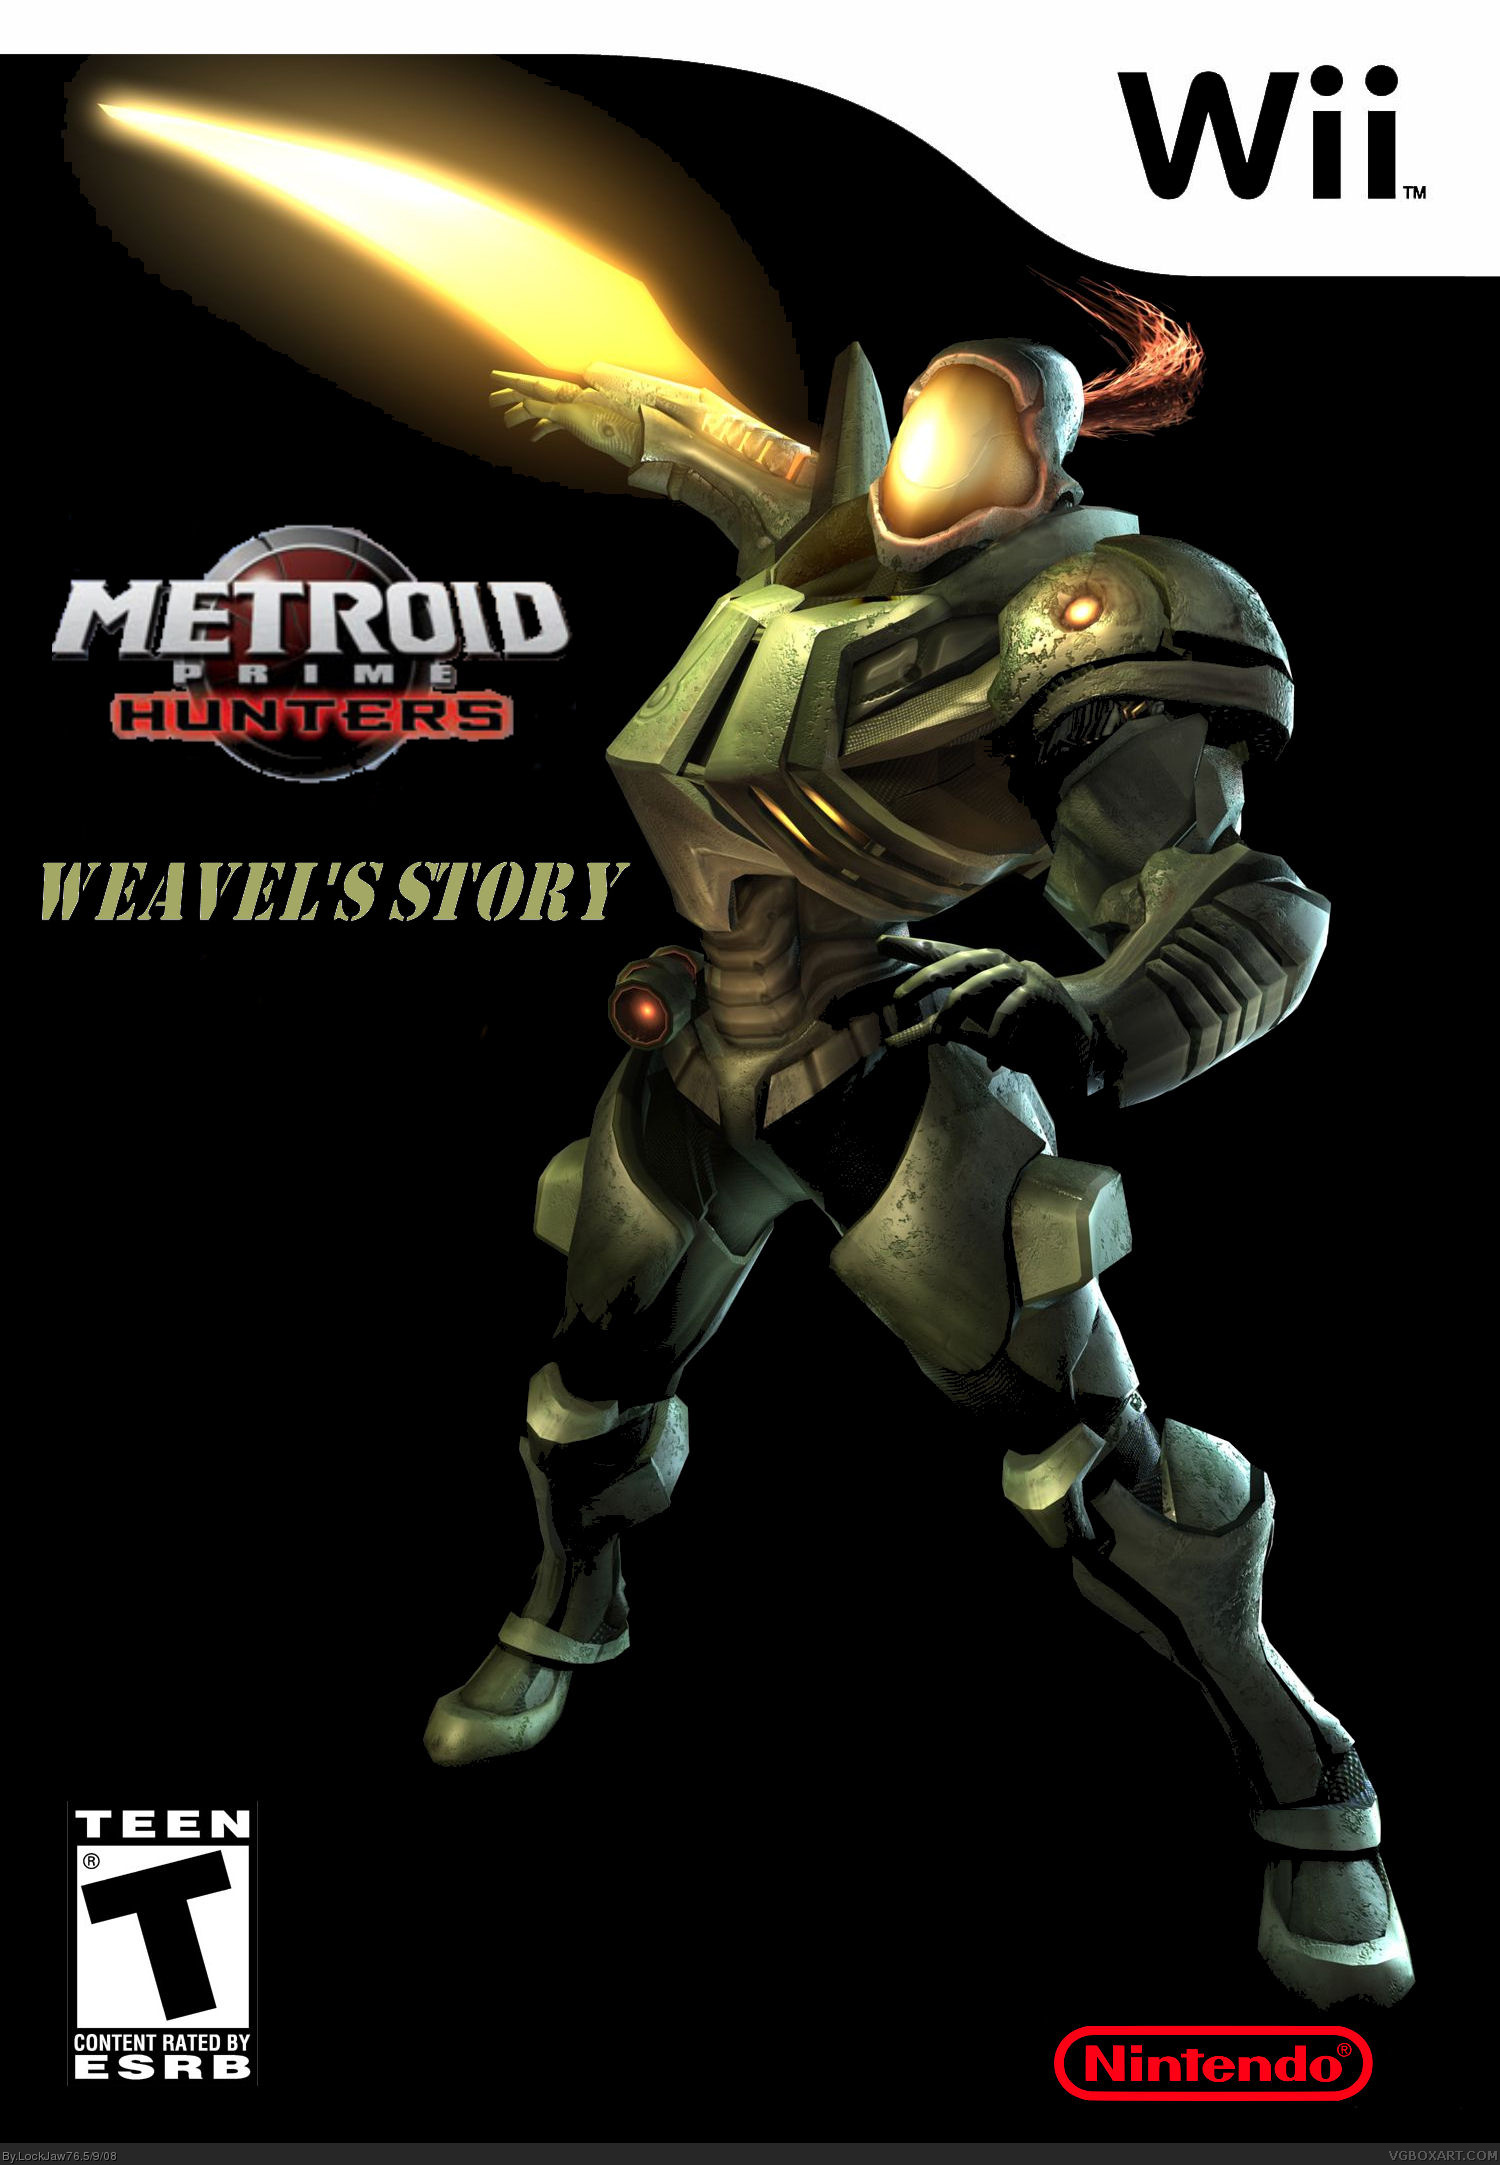 Metroid Prime Hunters: Weavel's Story box cover